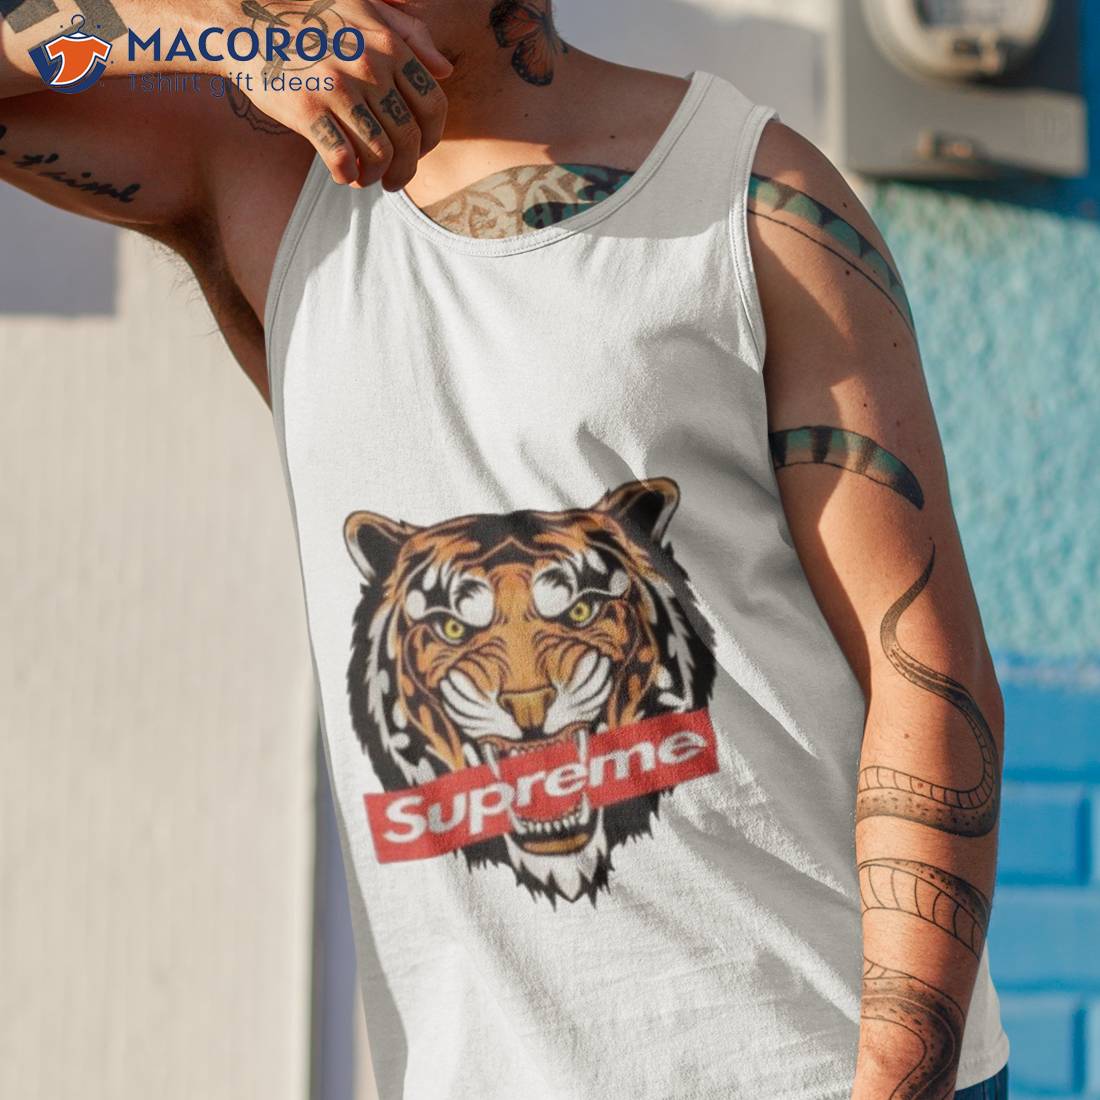 Tiger Supreme Box Logo Shirt